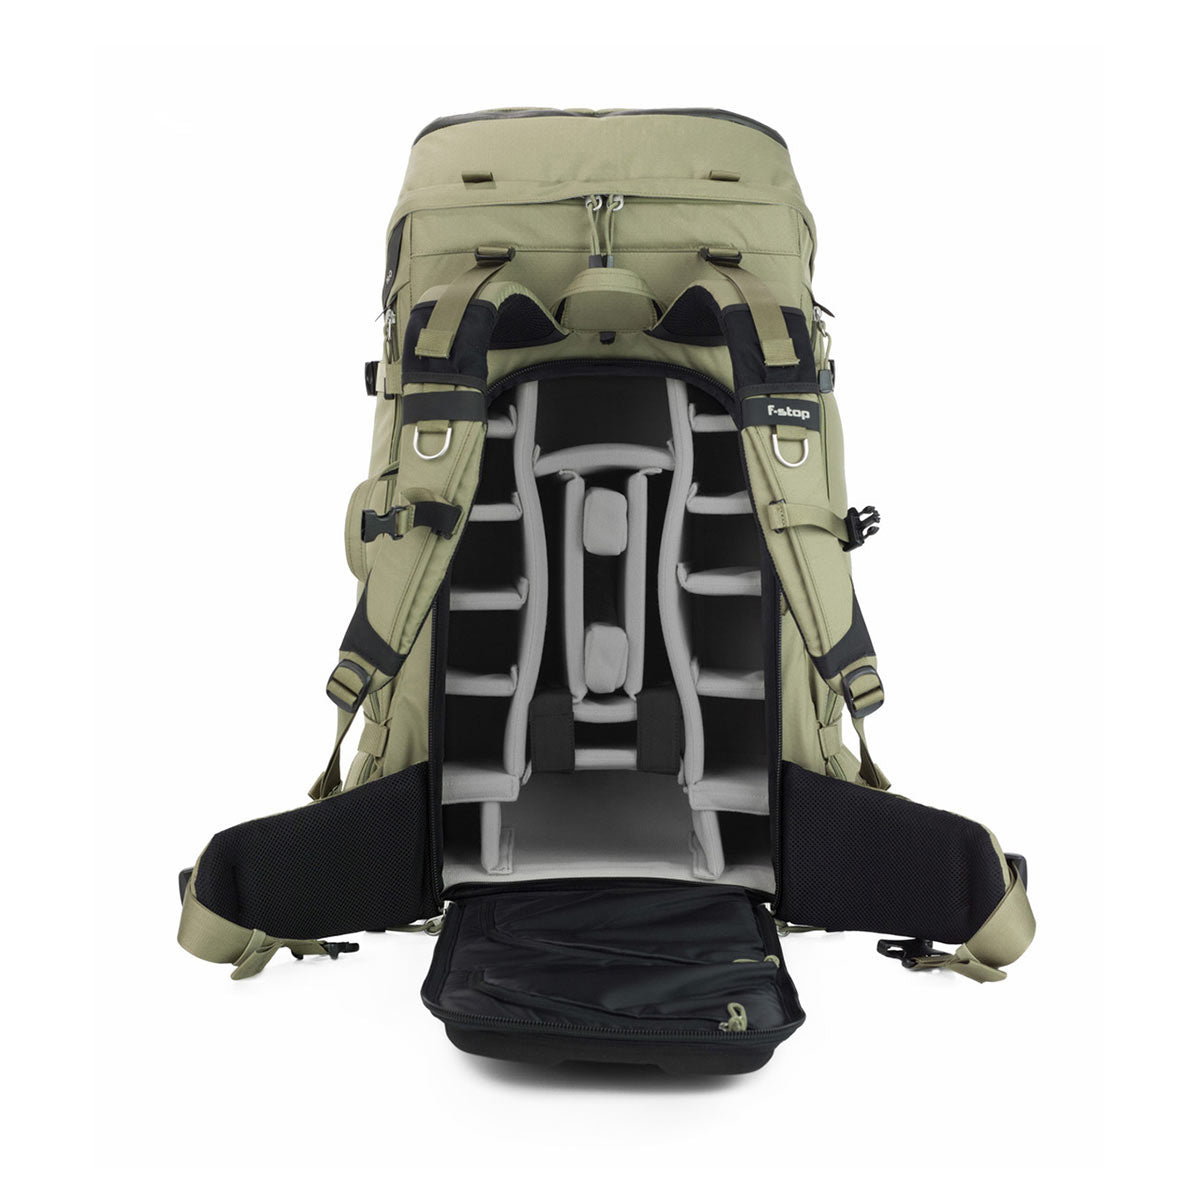 f-stop Mountain Series Shinn 80L Backpack Essentials Bundle (Matte Anthracite Black)